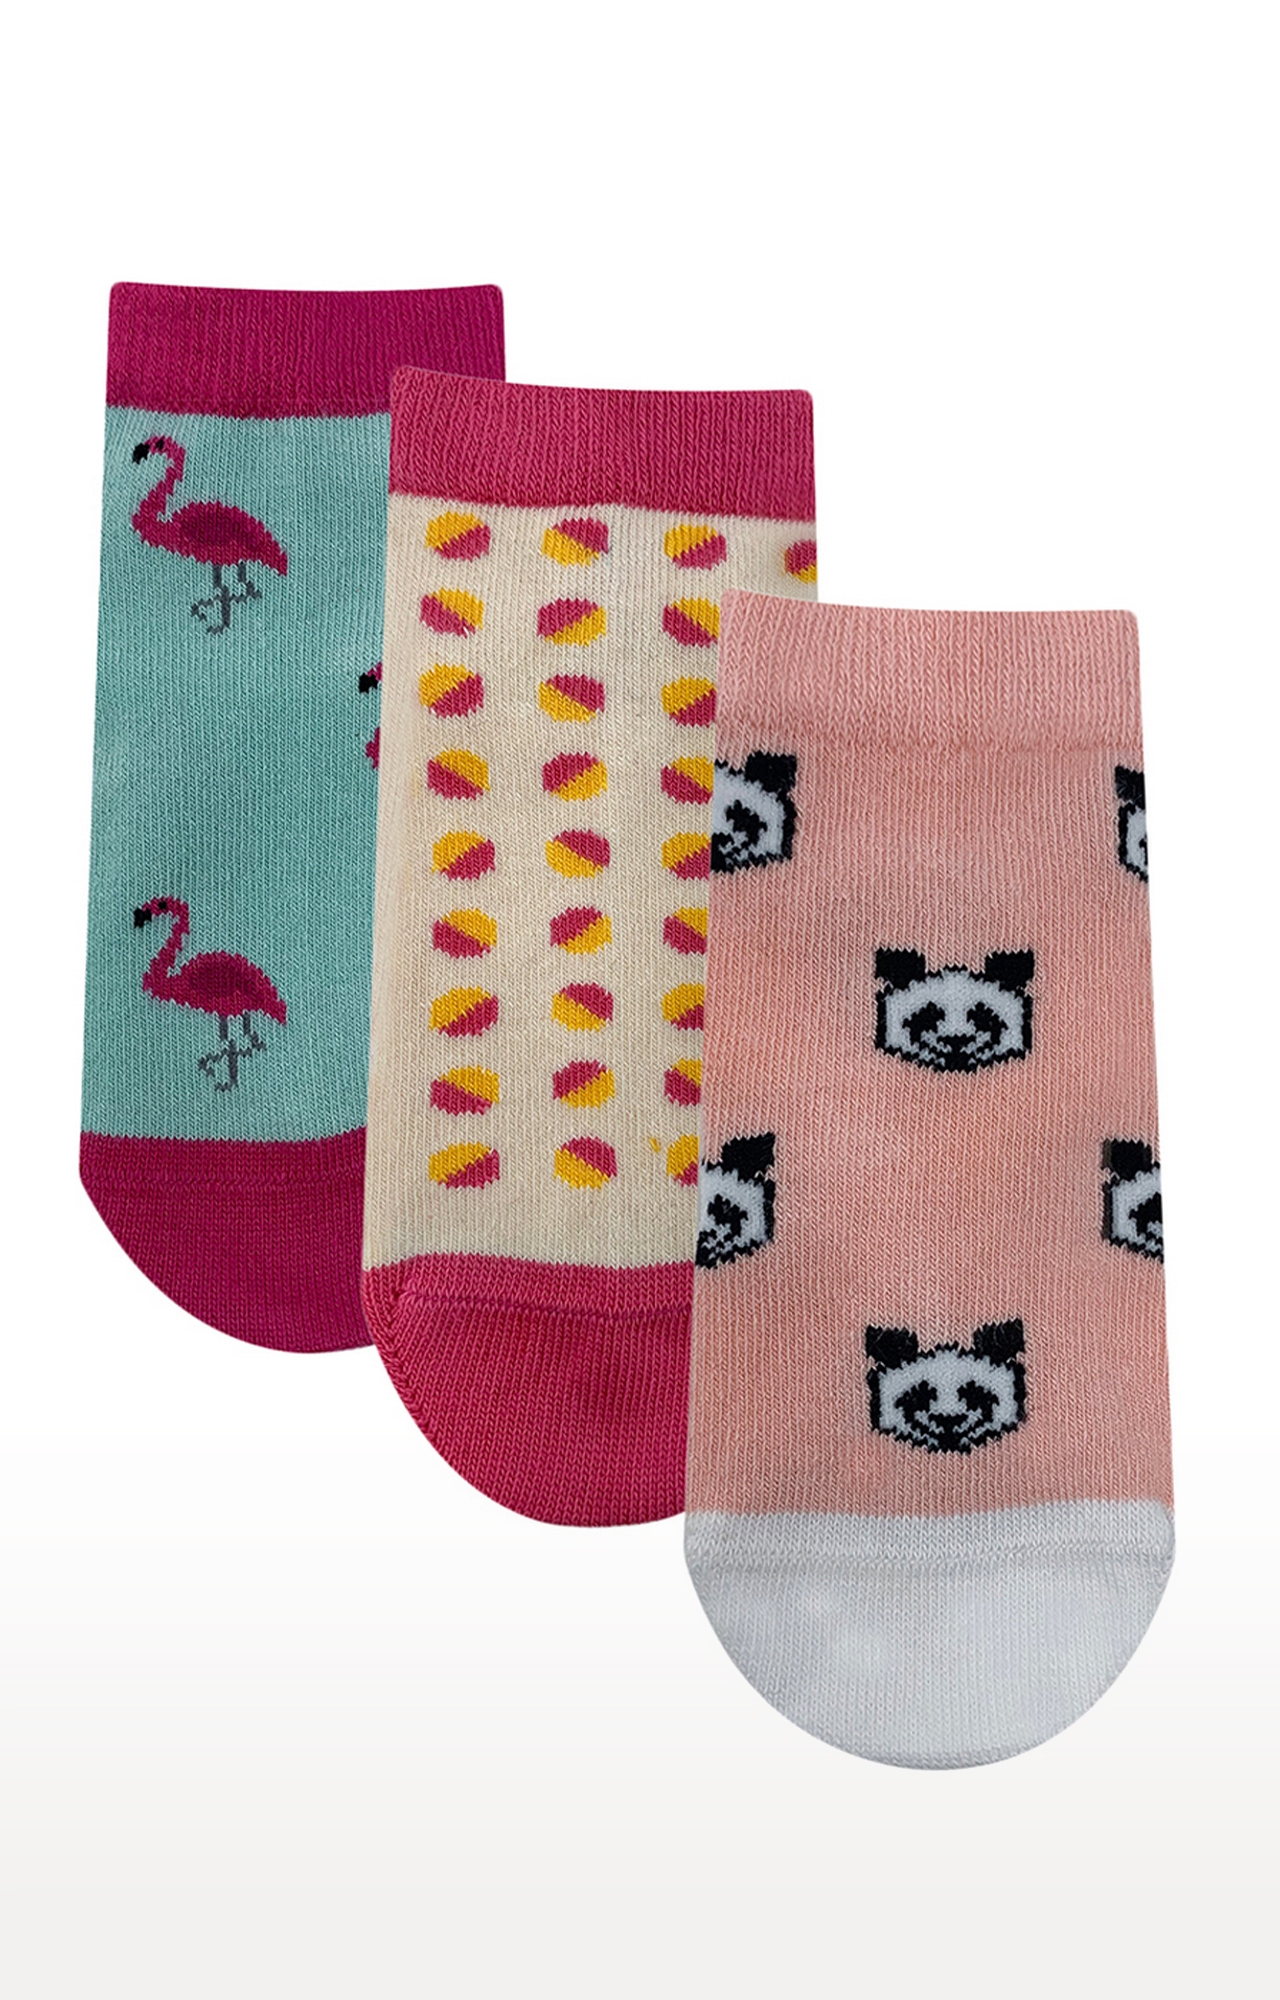 Mint & Oak | Mint & Oak Pink Delight Cotton Multi Ankle Length Socks for Kids - Pack of 3 1